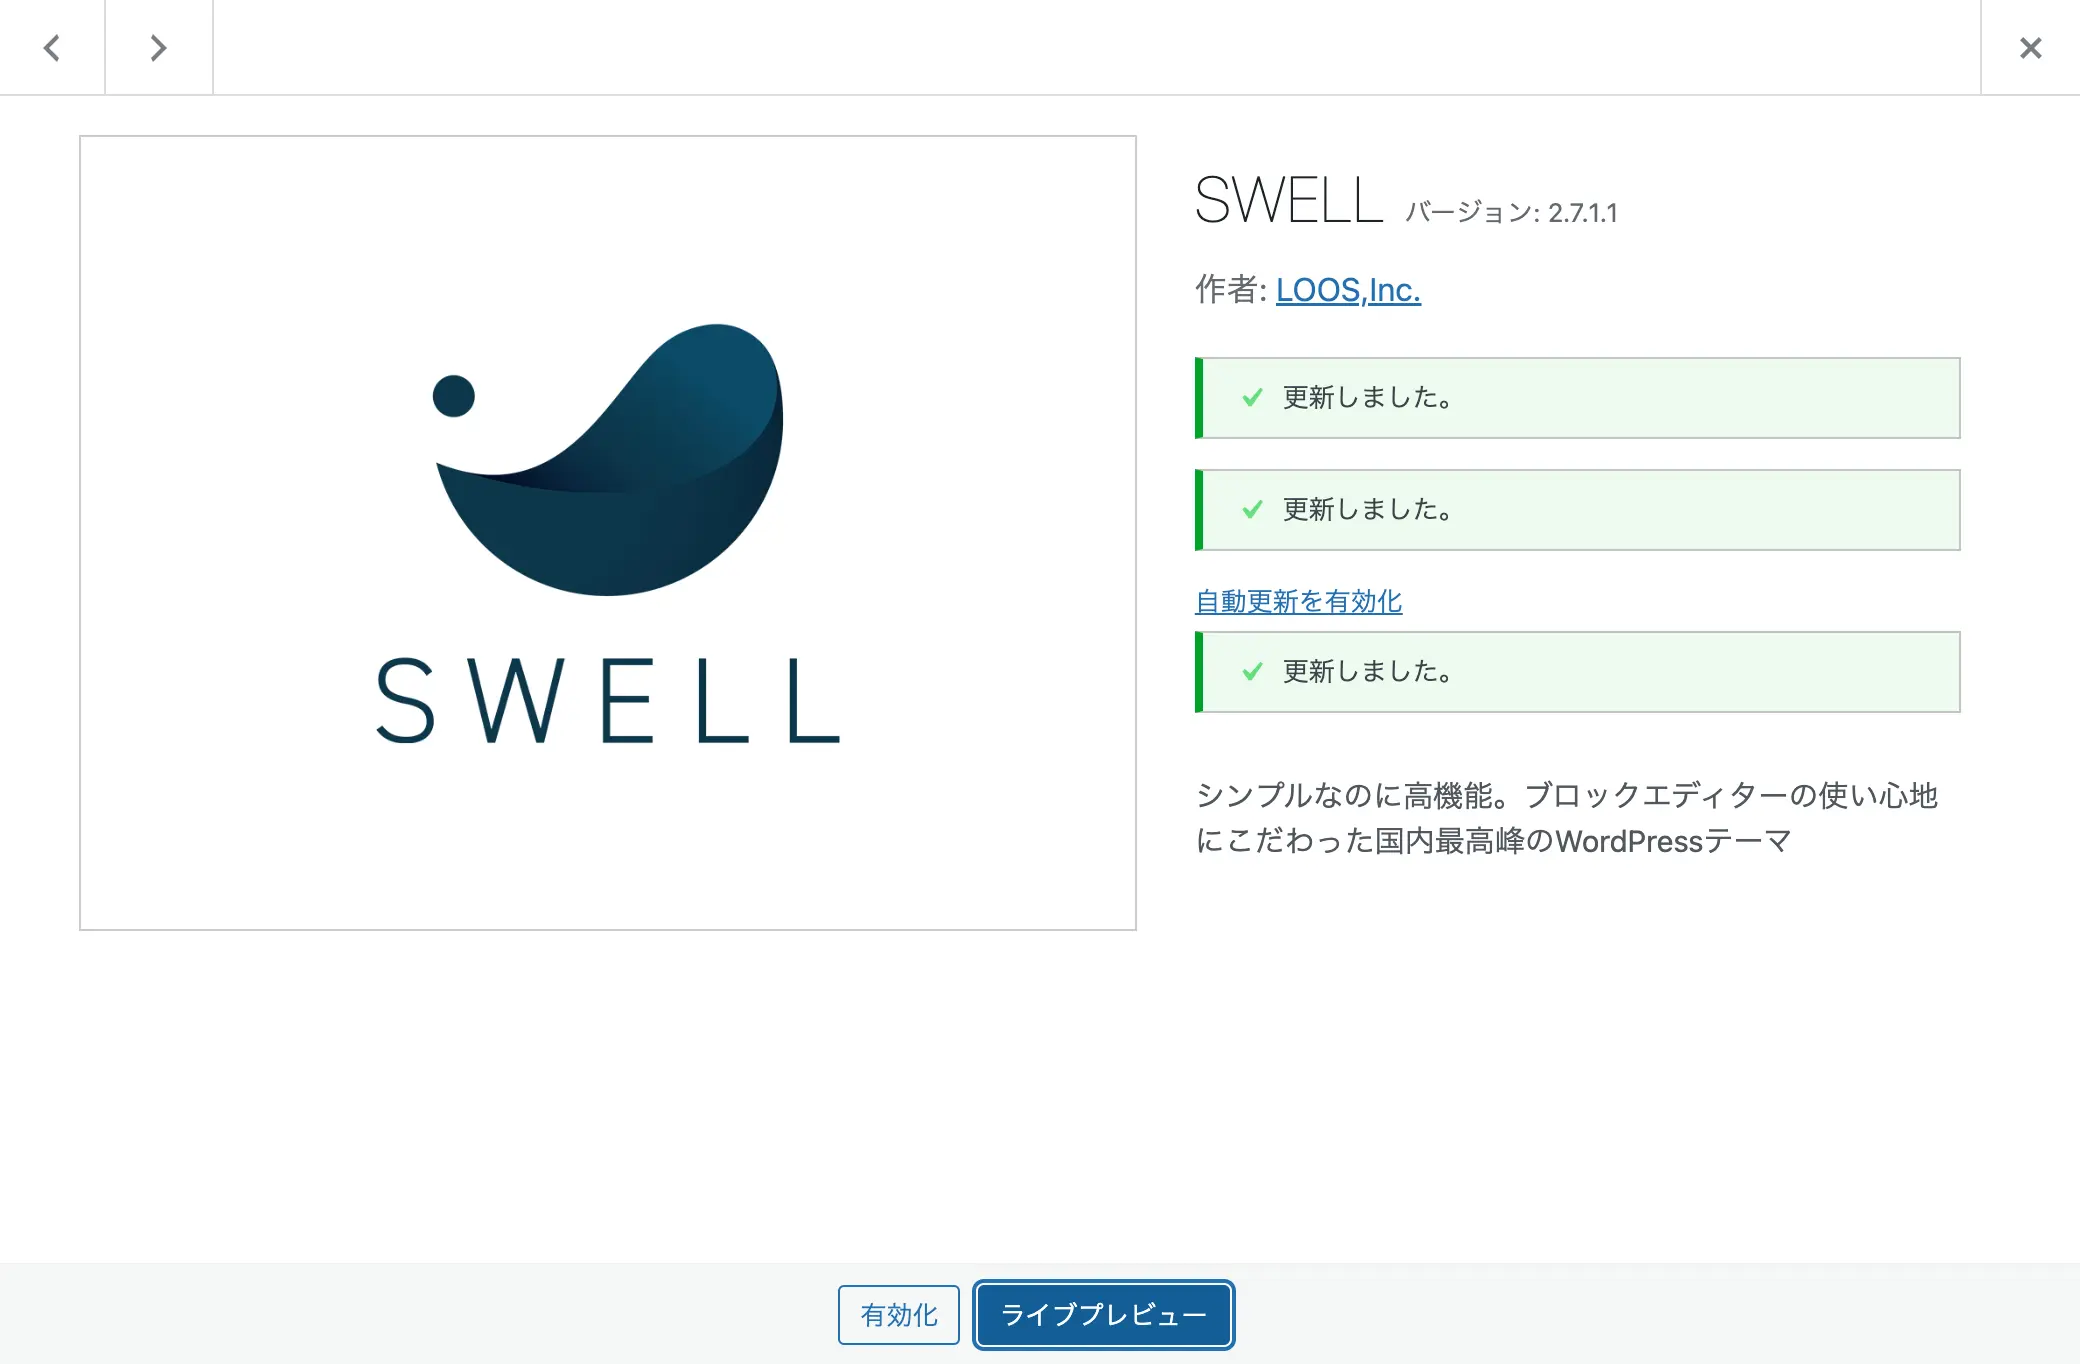 SWELlバージョン2.7.1.1